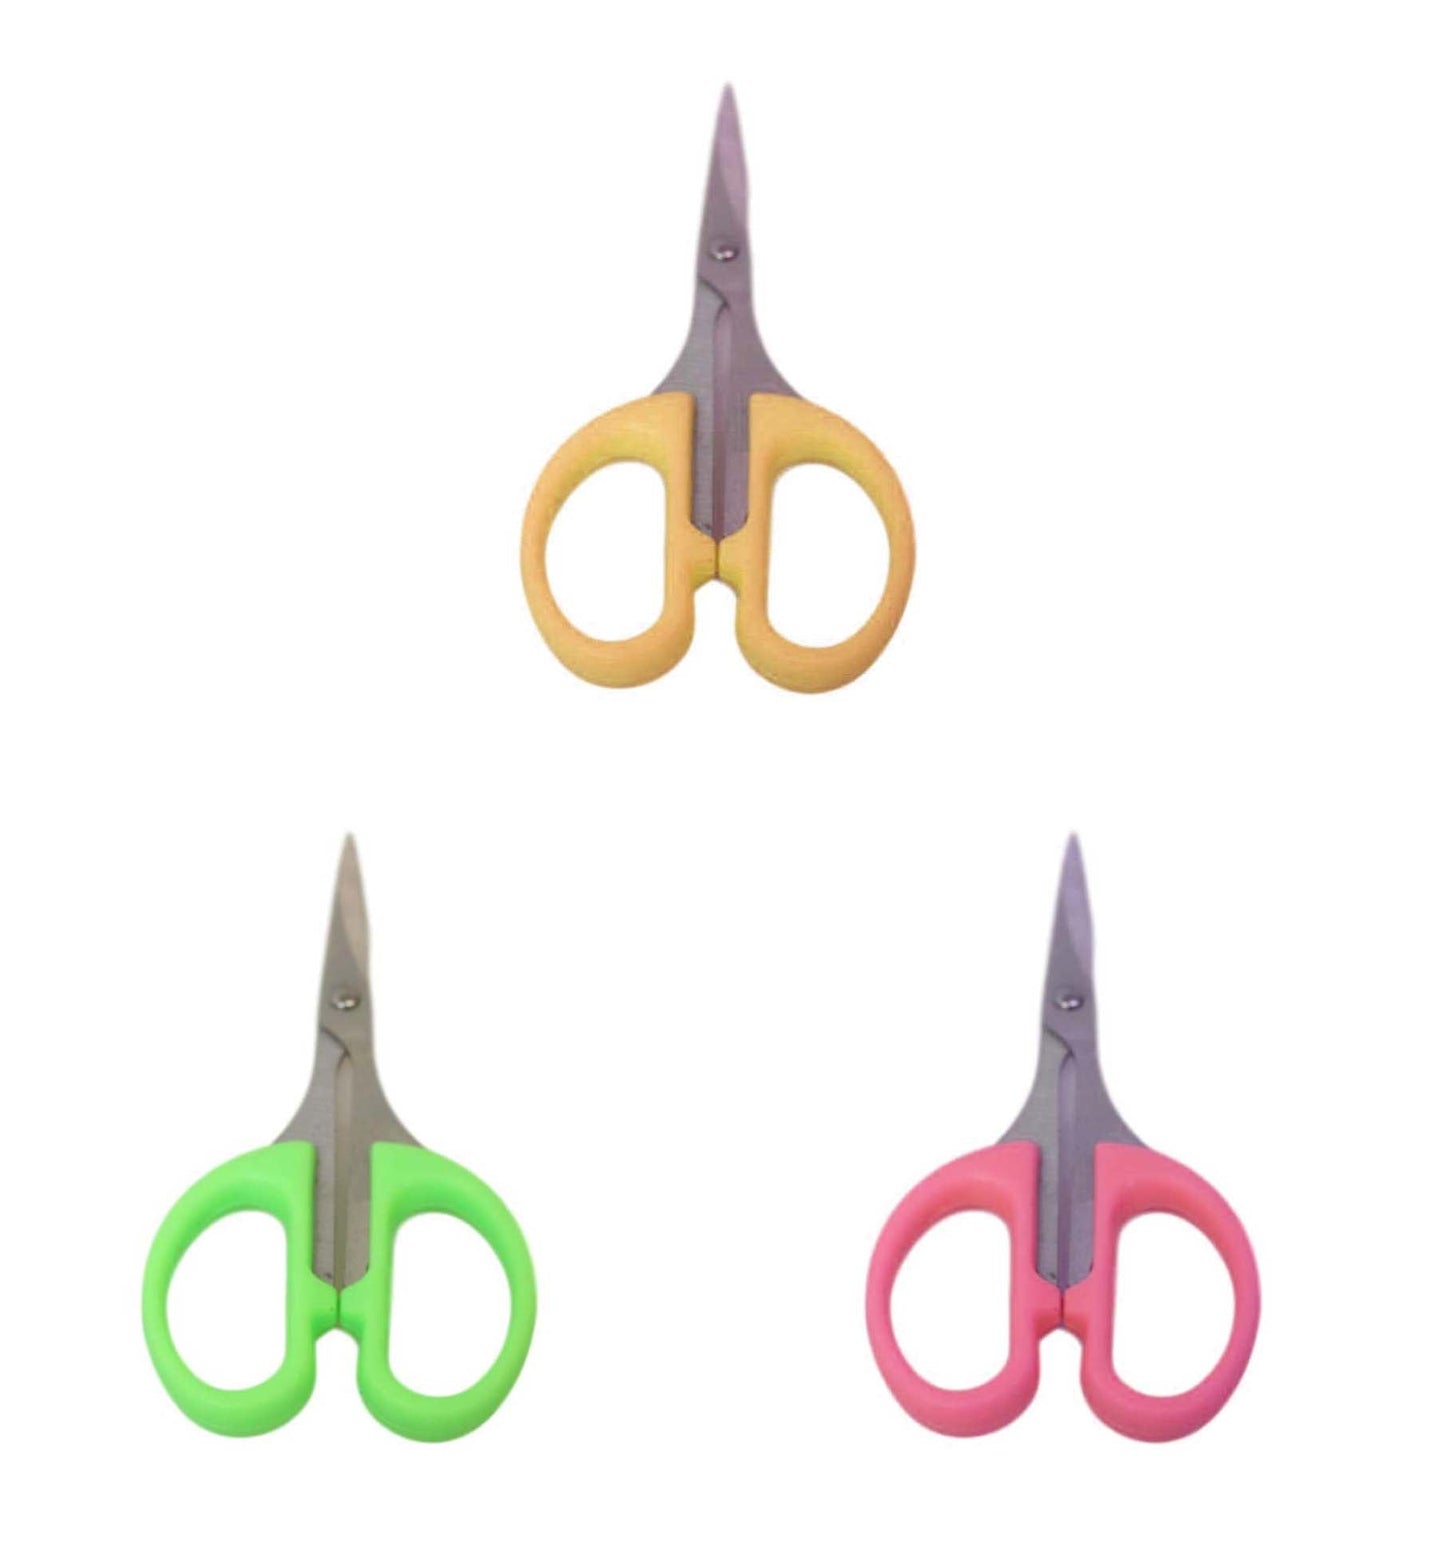 Household Scissors Small Pair Scissors Beauty Quick Fix Scissor 6565 (Large Letter Rate)